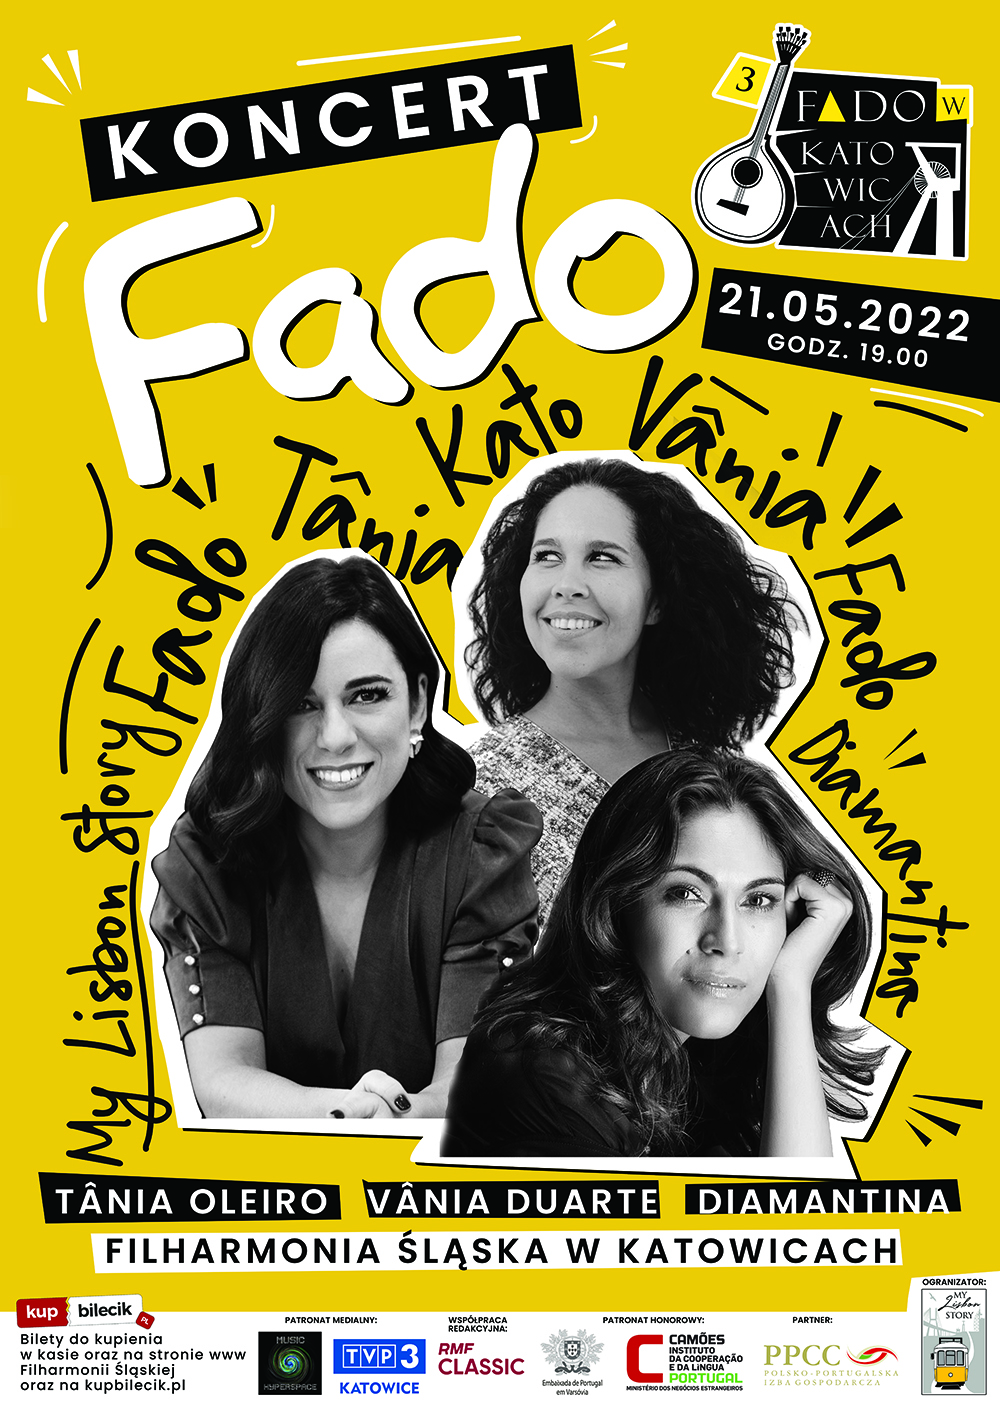 "Fado in Katowice" concert, 21 May 2022